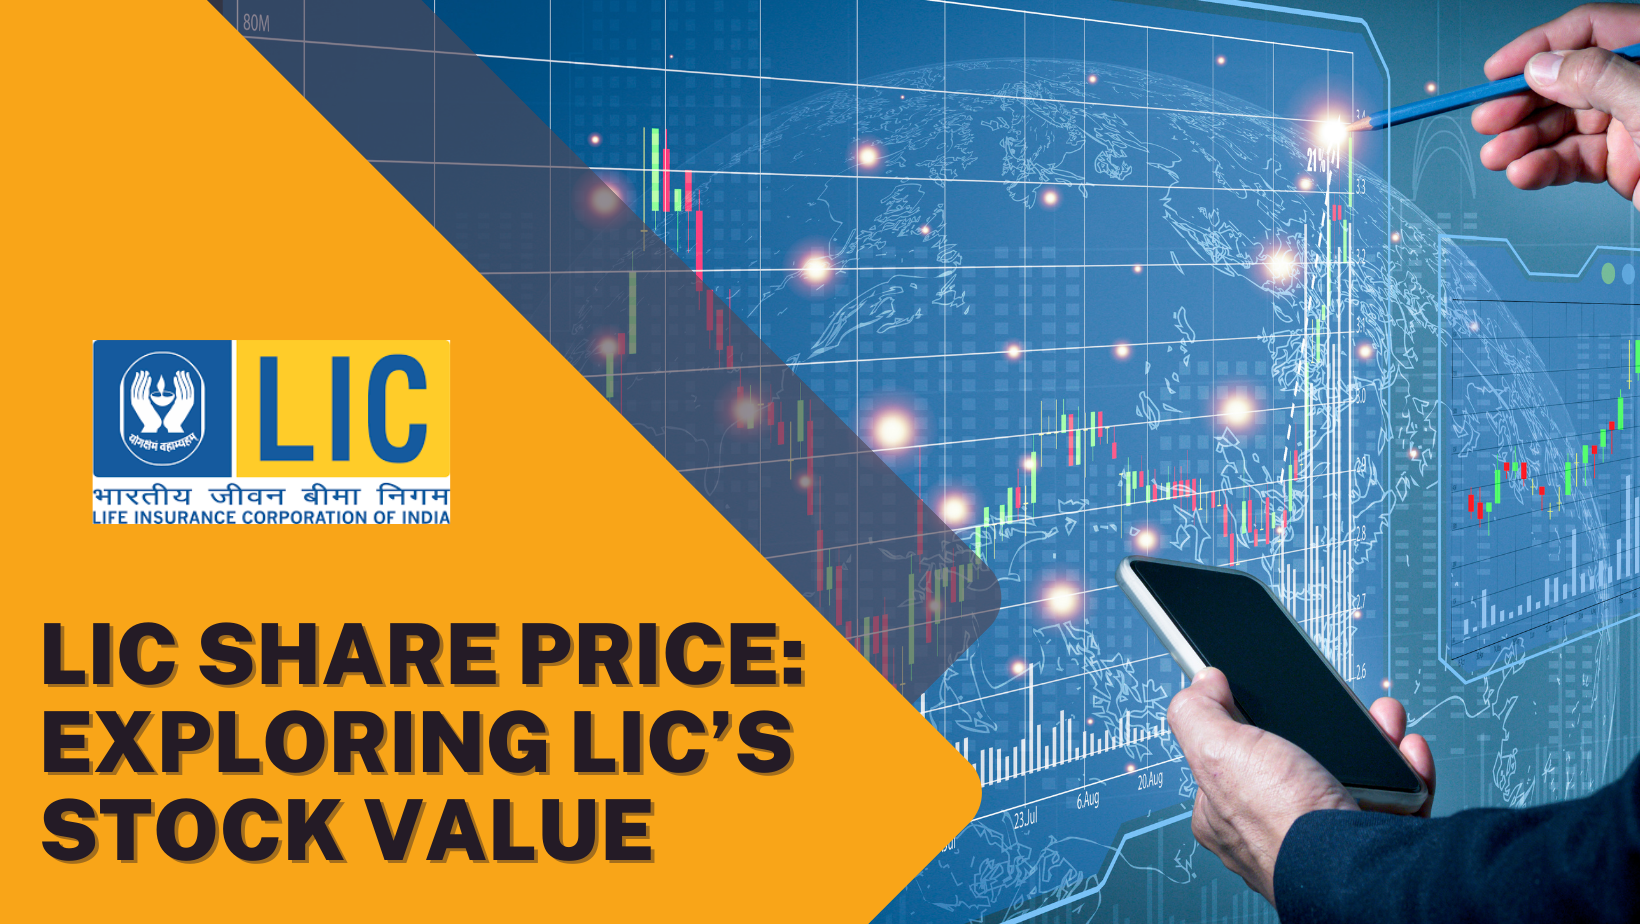 Lic Share Price: Exploring LIC’s Stock Value